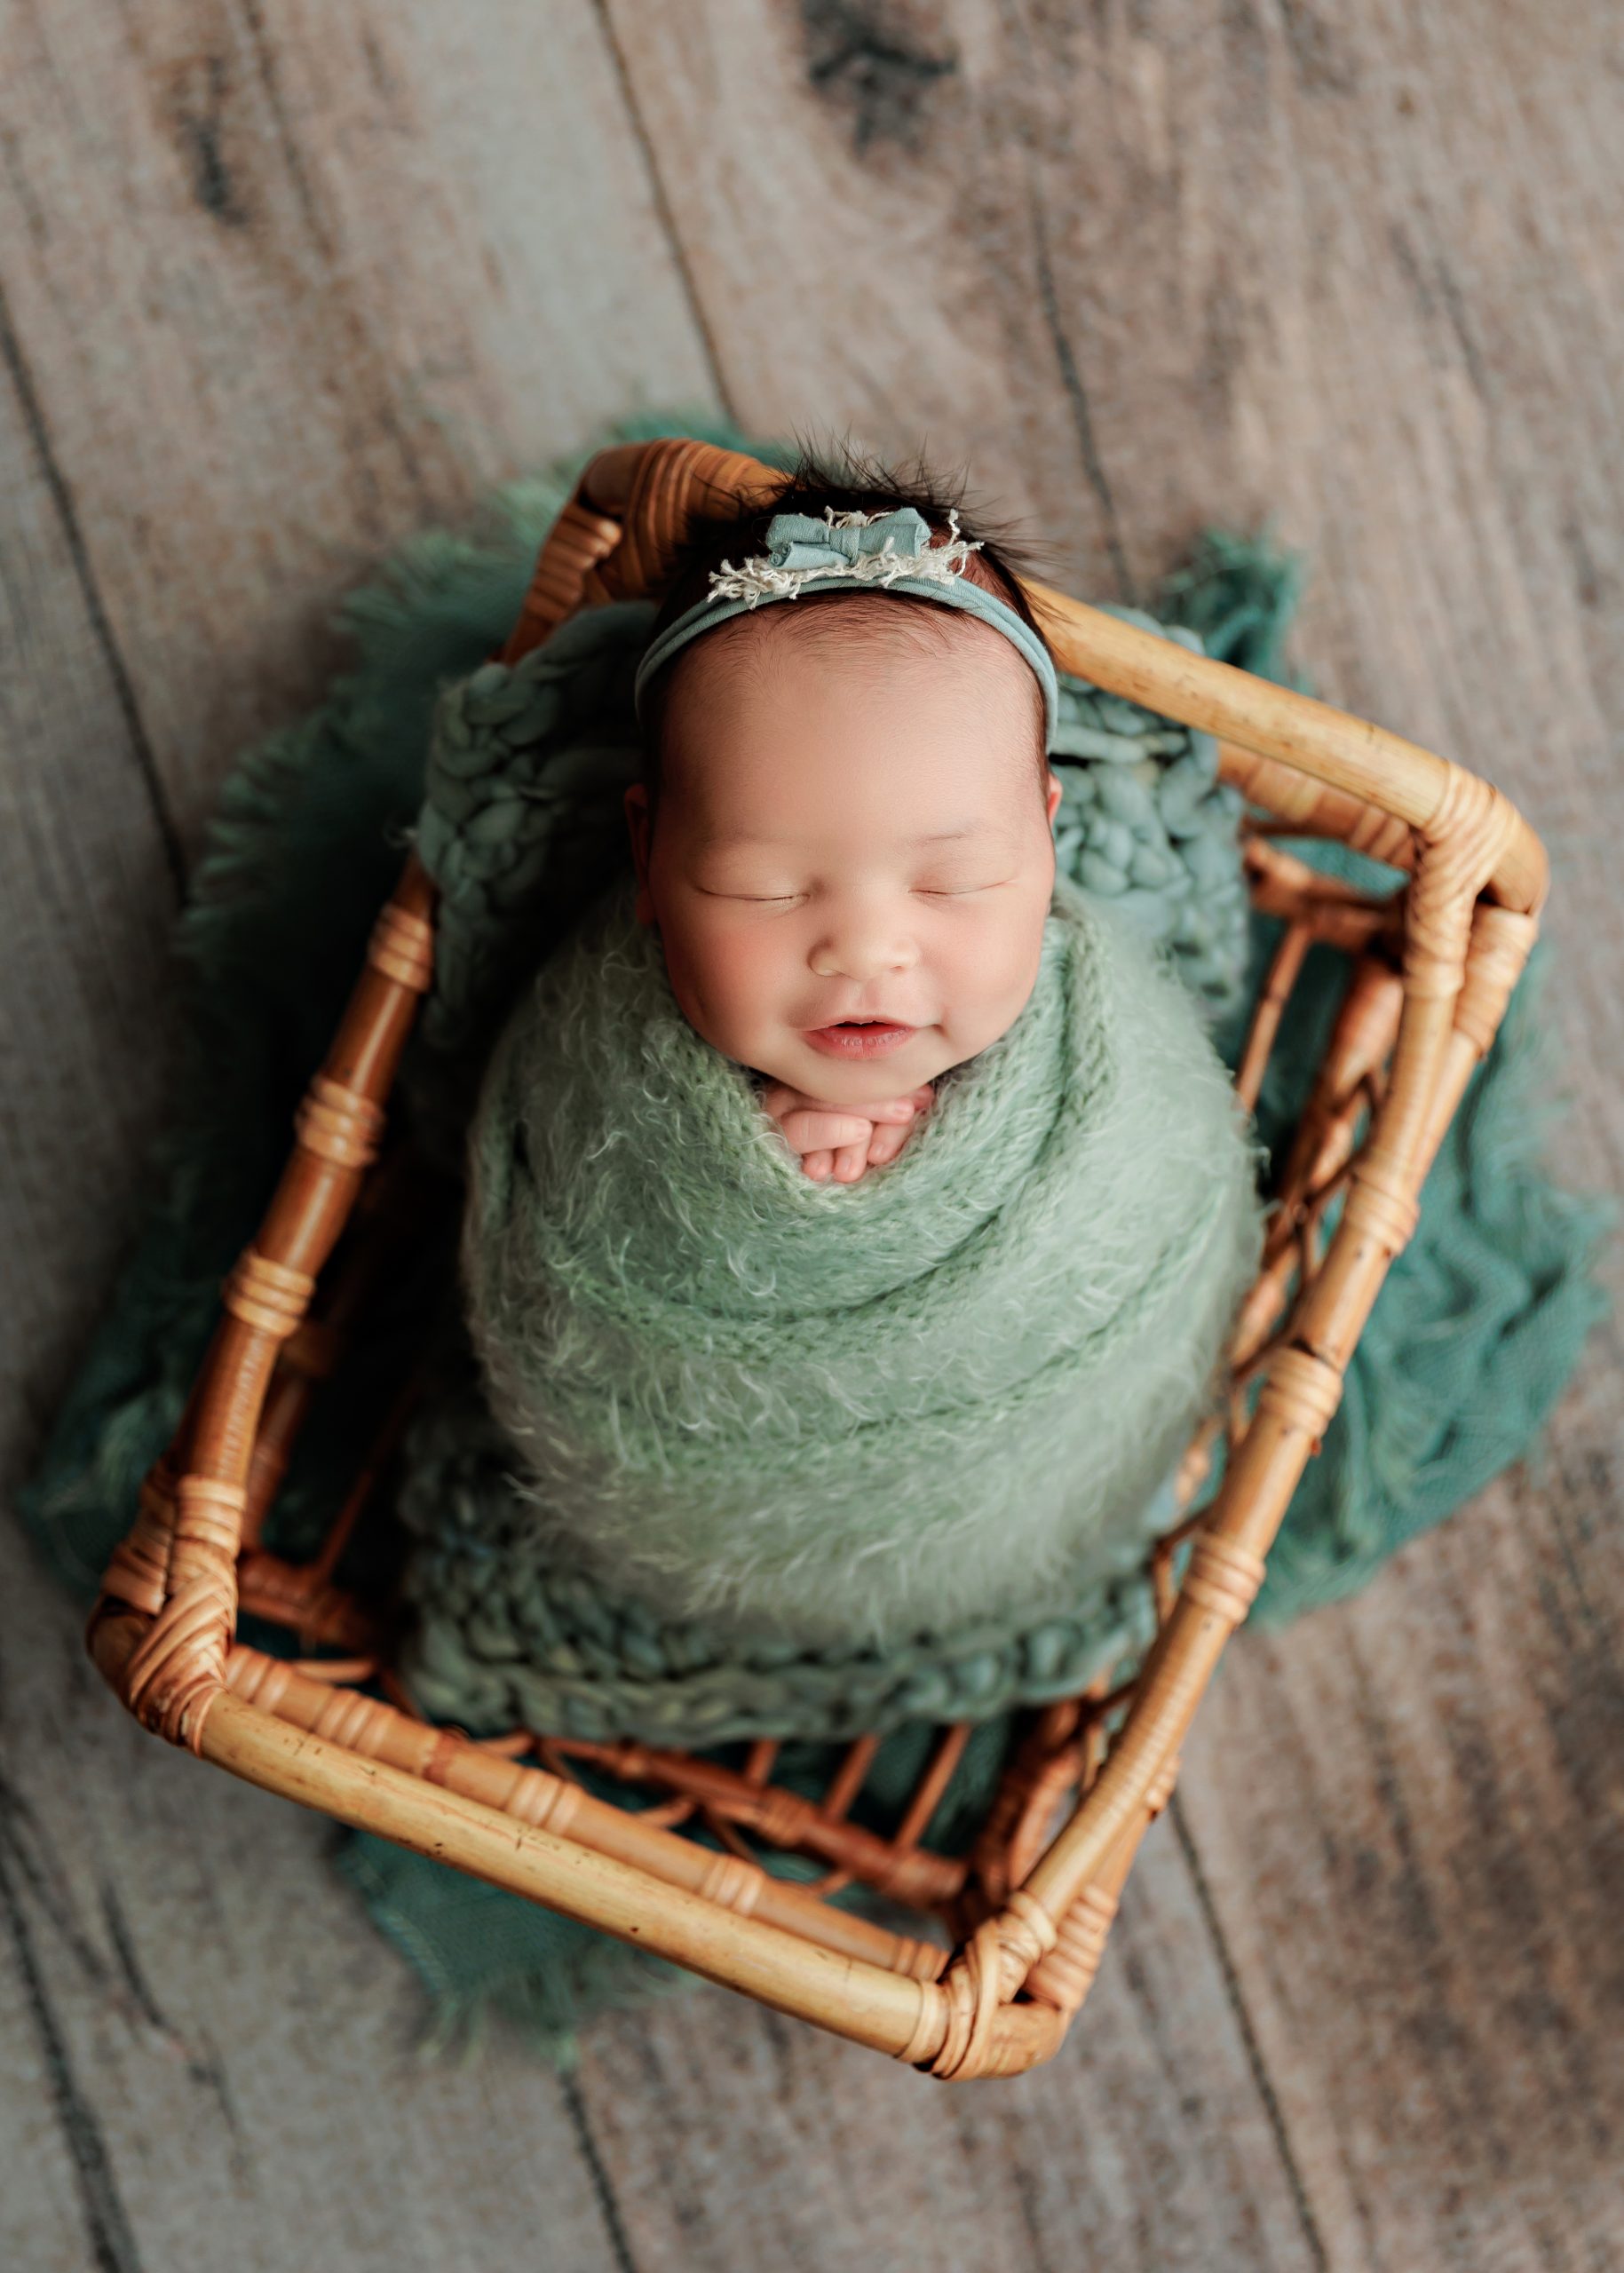 medfield ma newborn photographer, newborn photography near me, professional newborn photos, newborn portrait studio